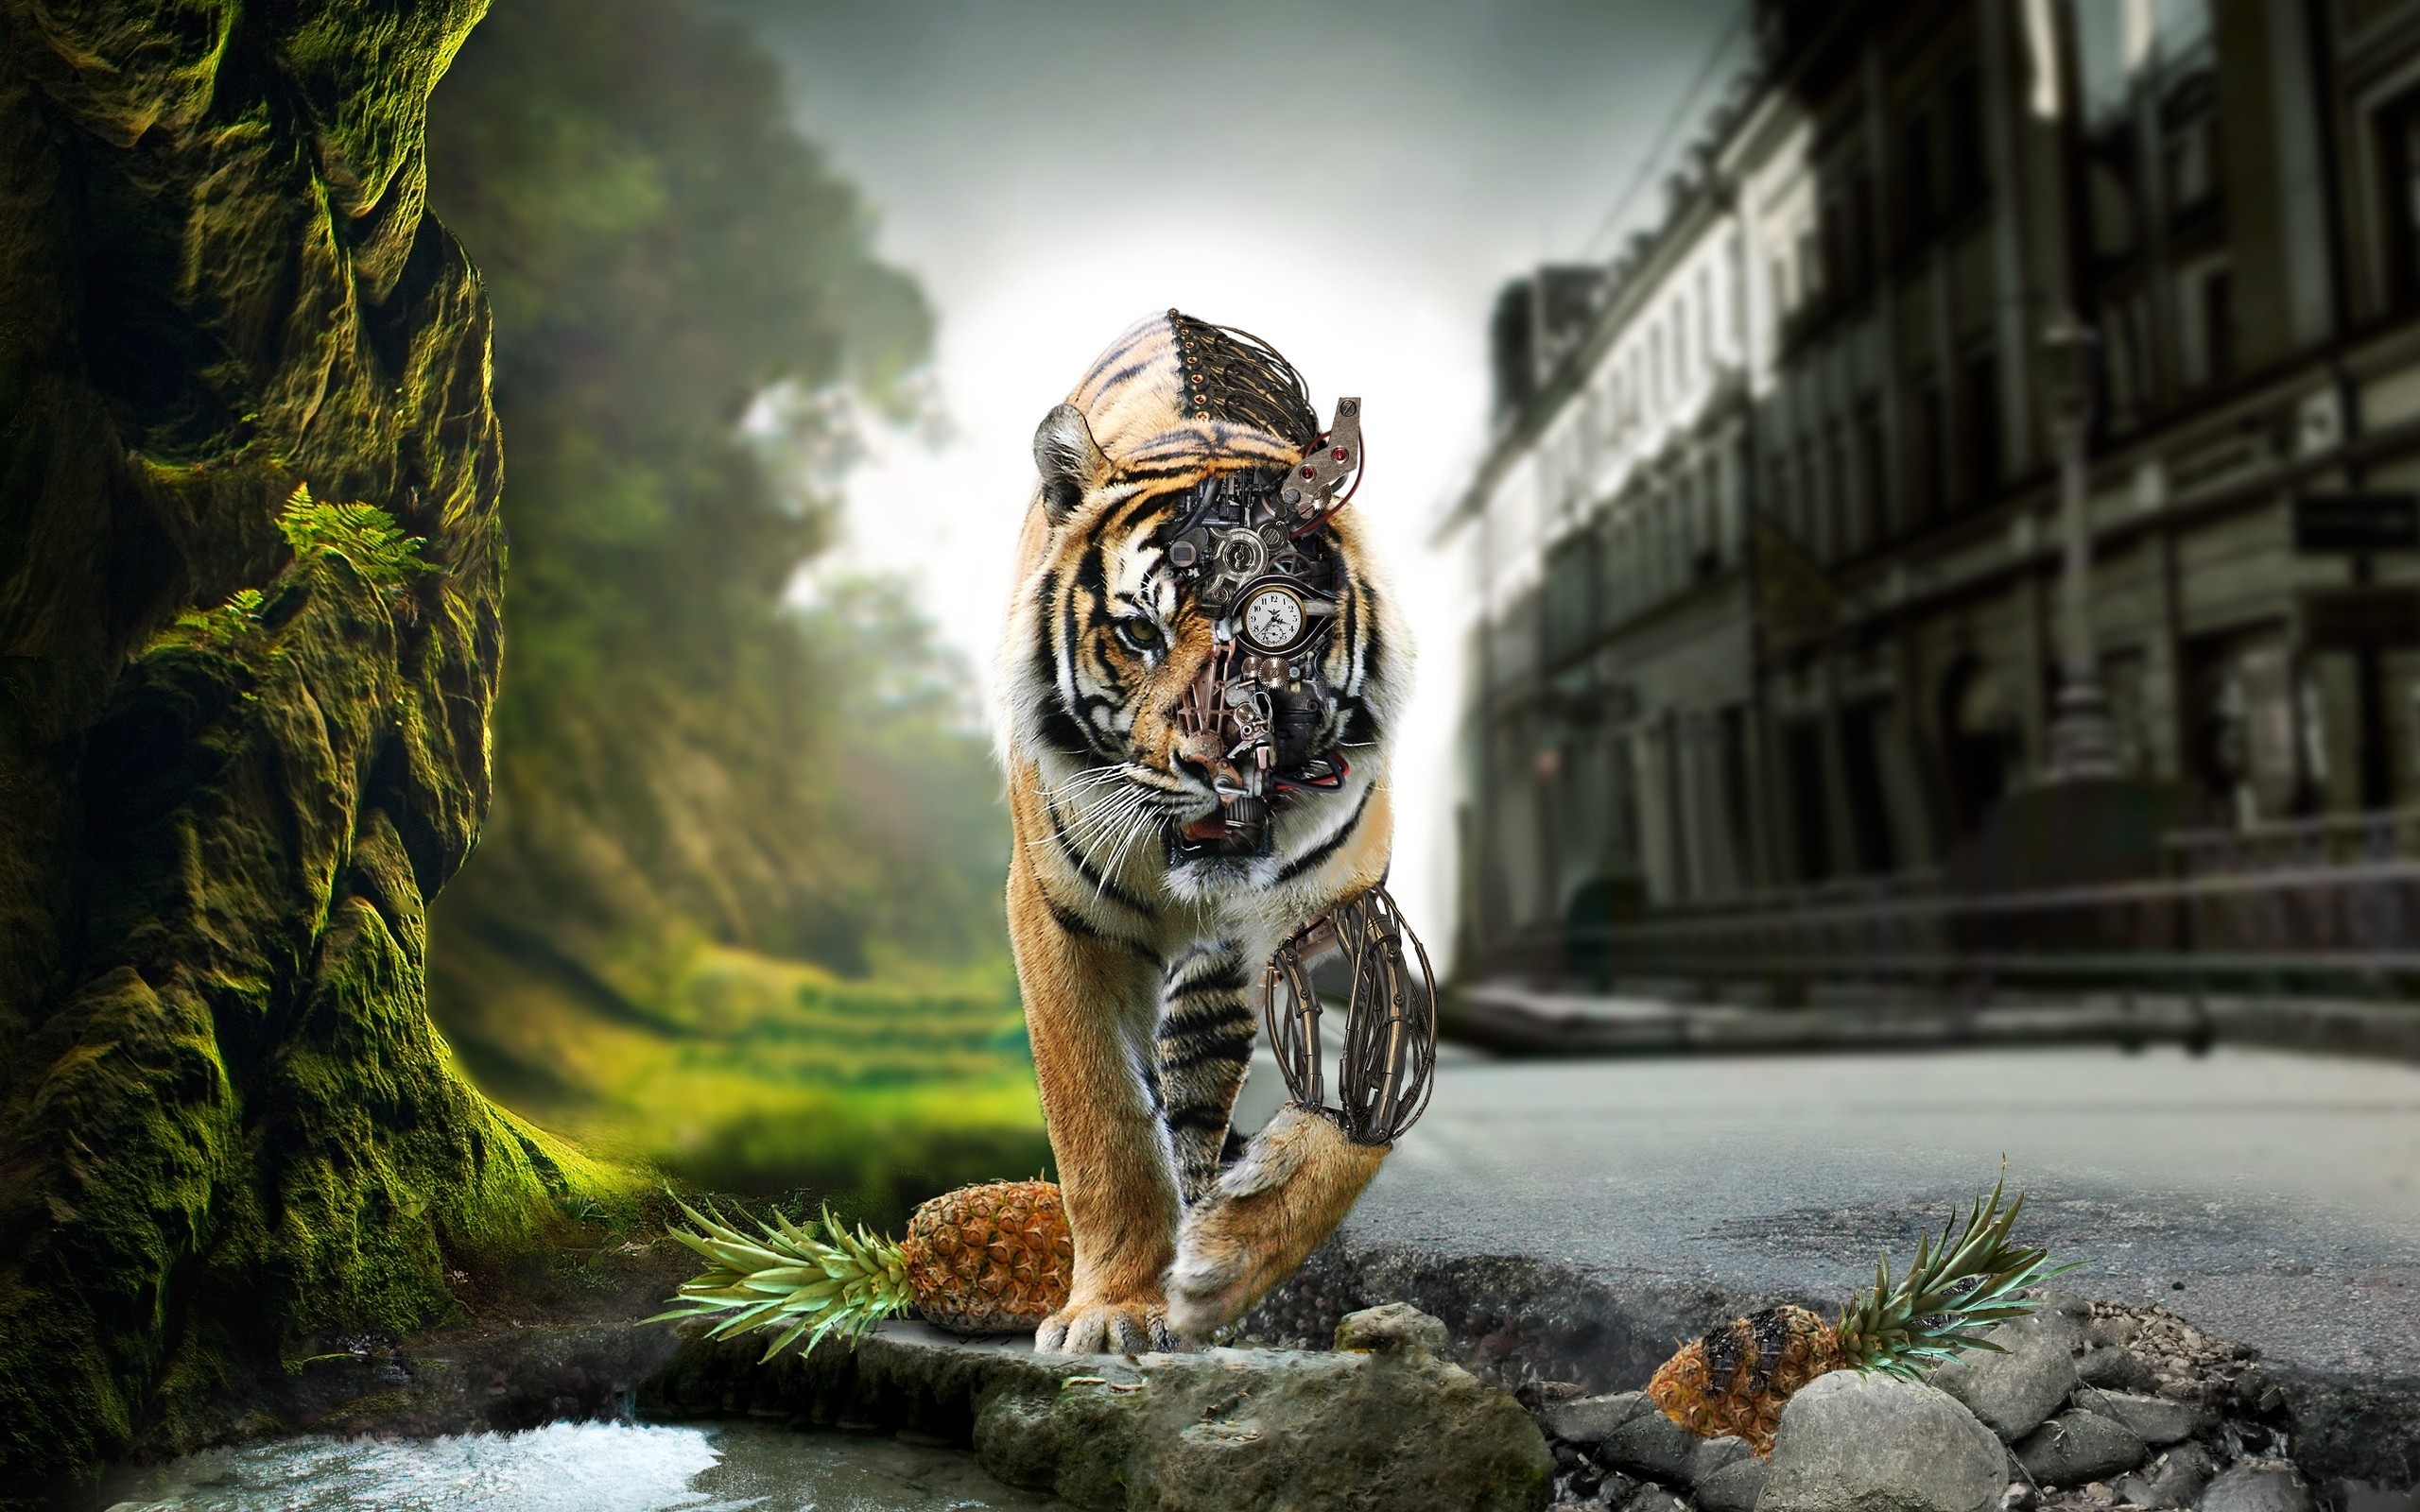 Tiger wallpaper 4k tiger images hd